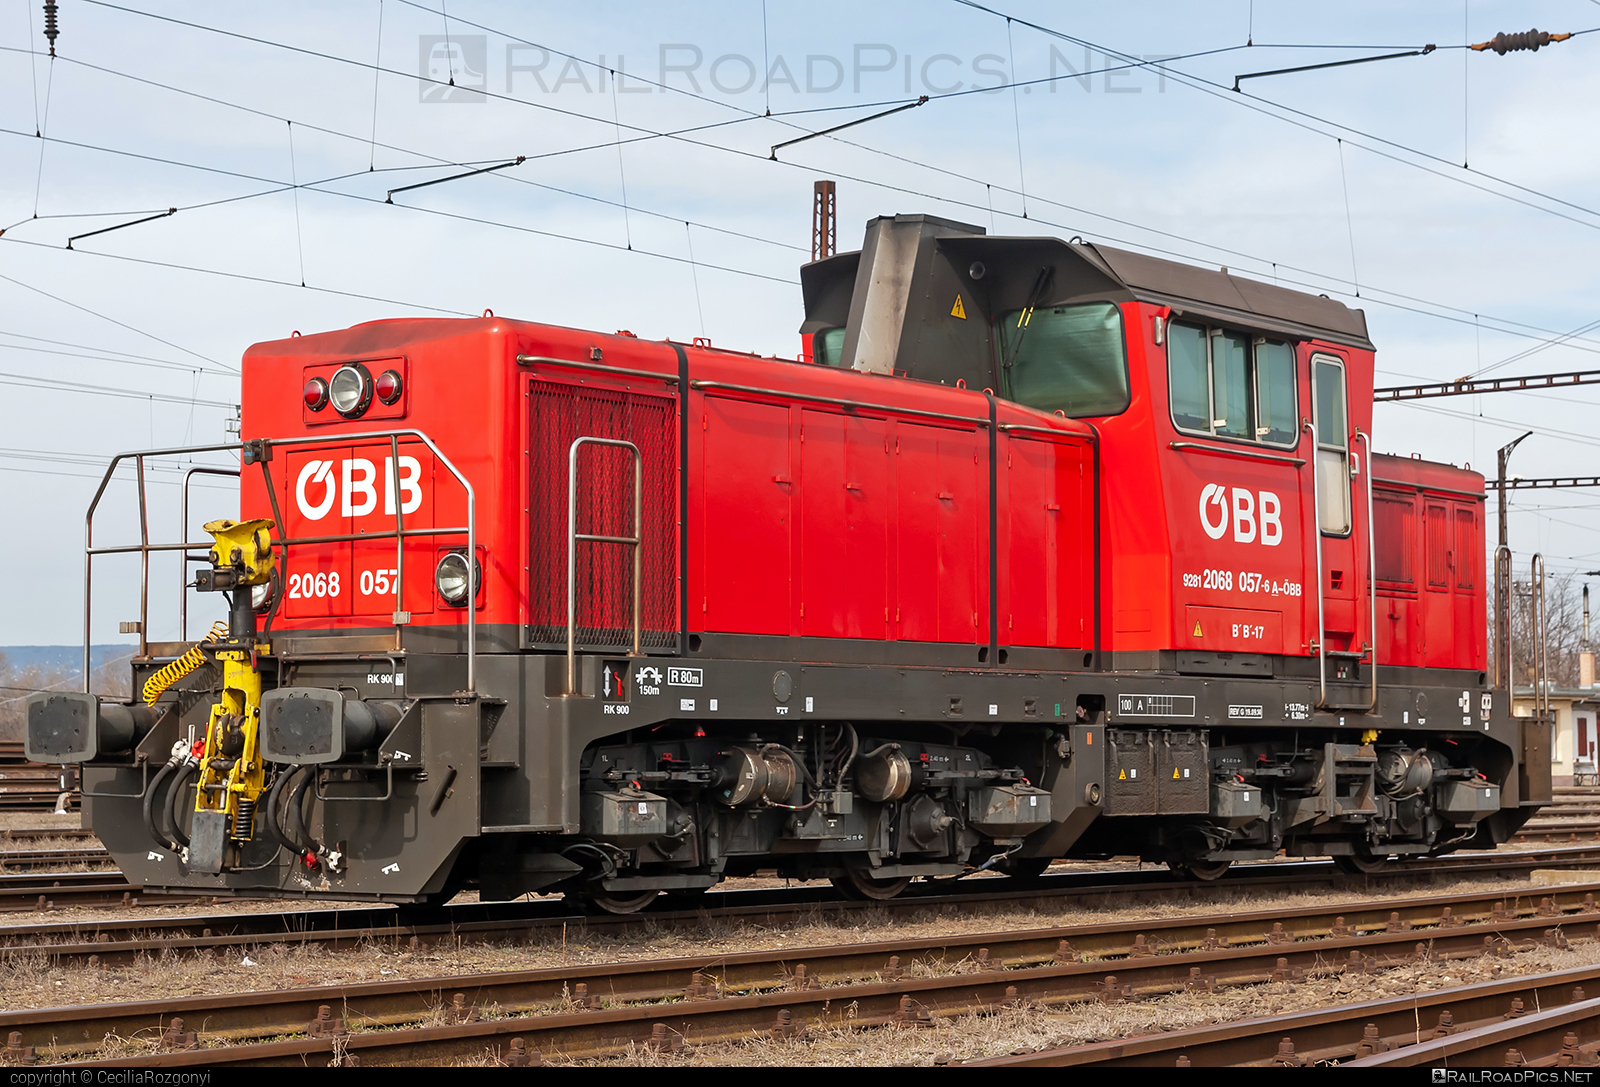 Jenbacher ÖBB Class 2068 - 2068 057 operated by Rail Cargo Hungaria ZRt. #flusterlok #jenbacher #jenbacher2068 #obb #obb2068 #obbClass2068 #osterreichischebundesbahnen